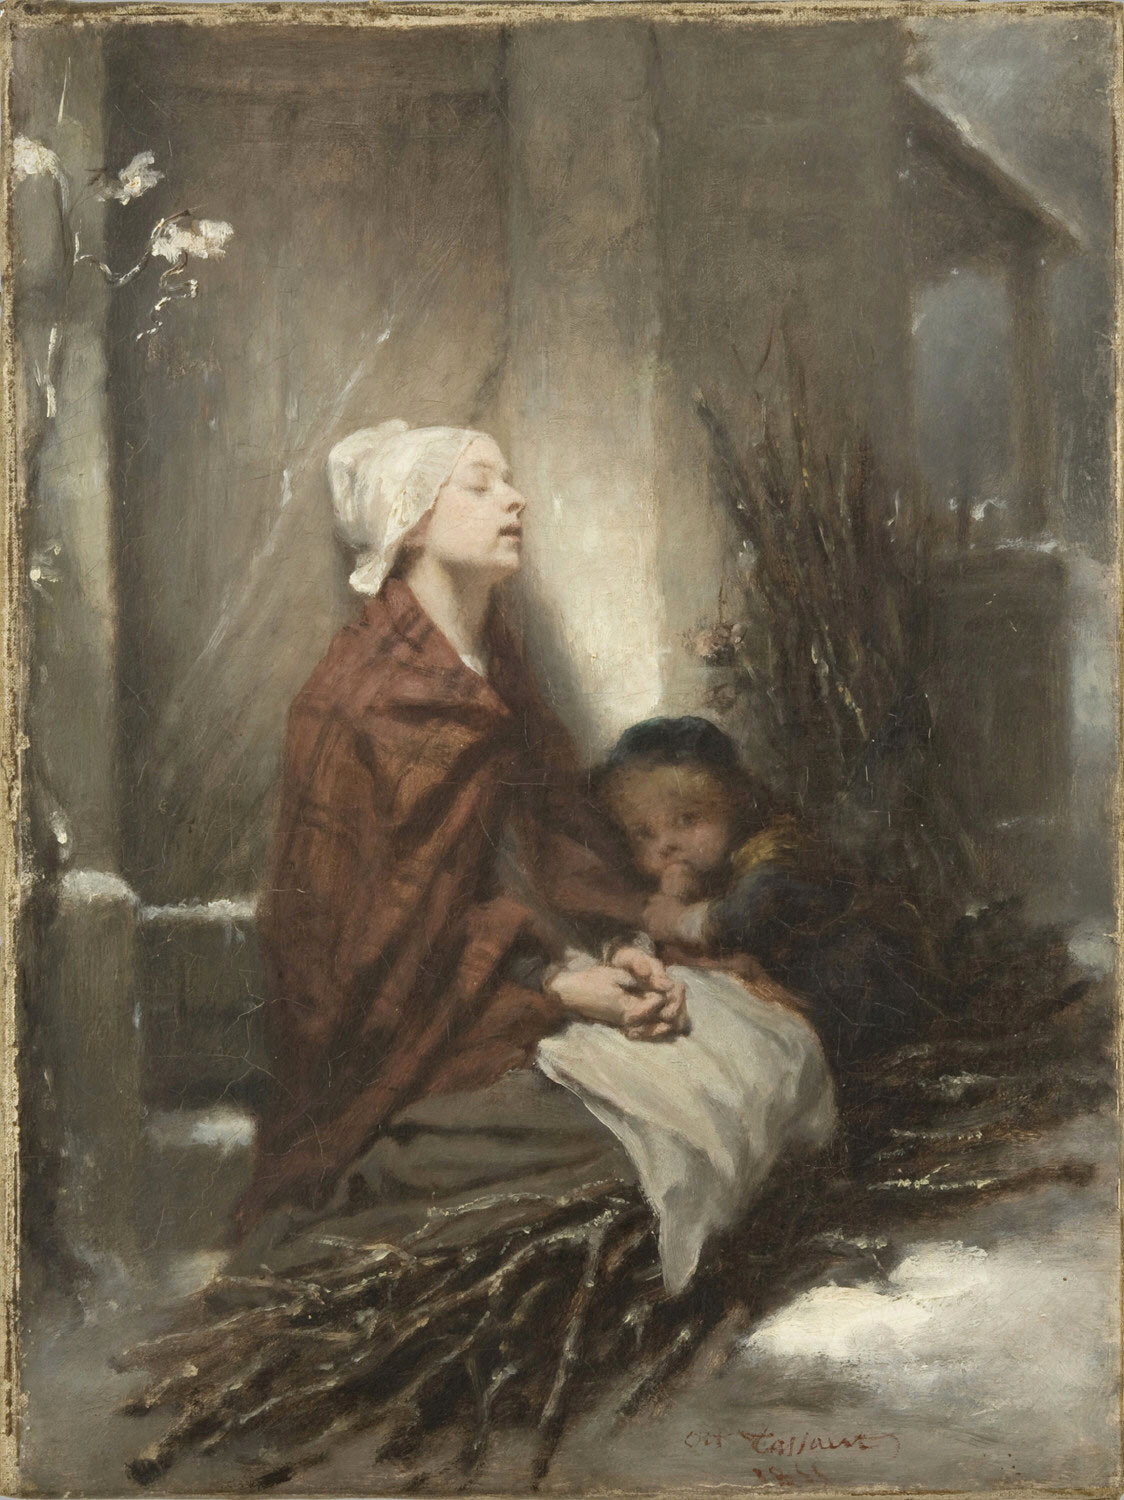 The Forlorn (Poor Children) by Octave Tassaert - 1855